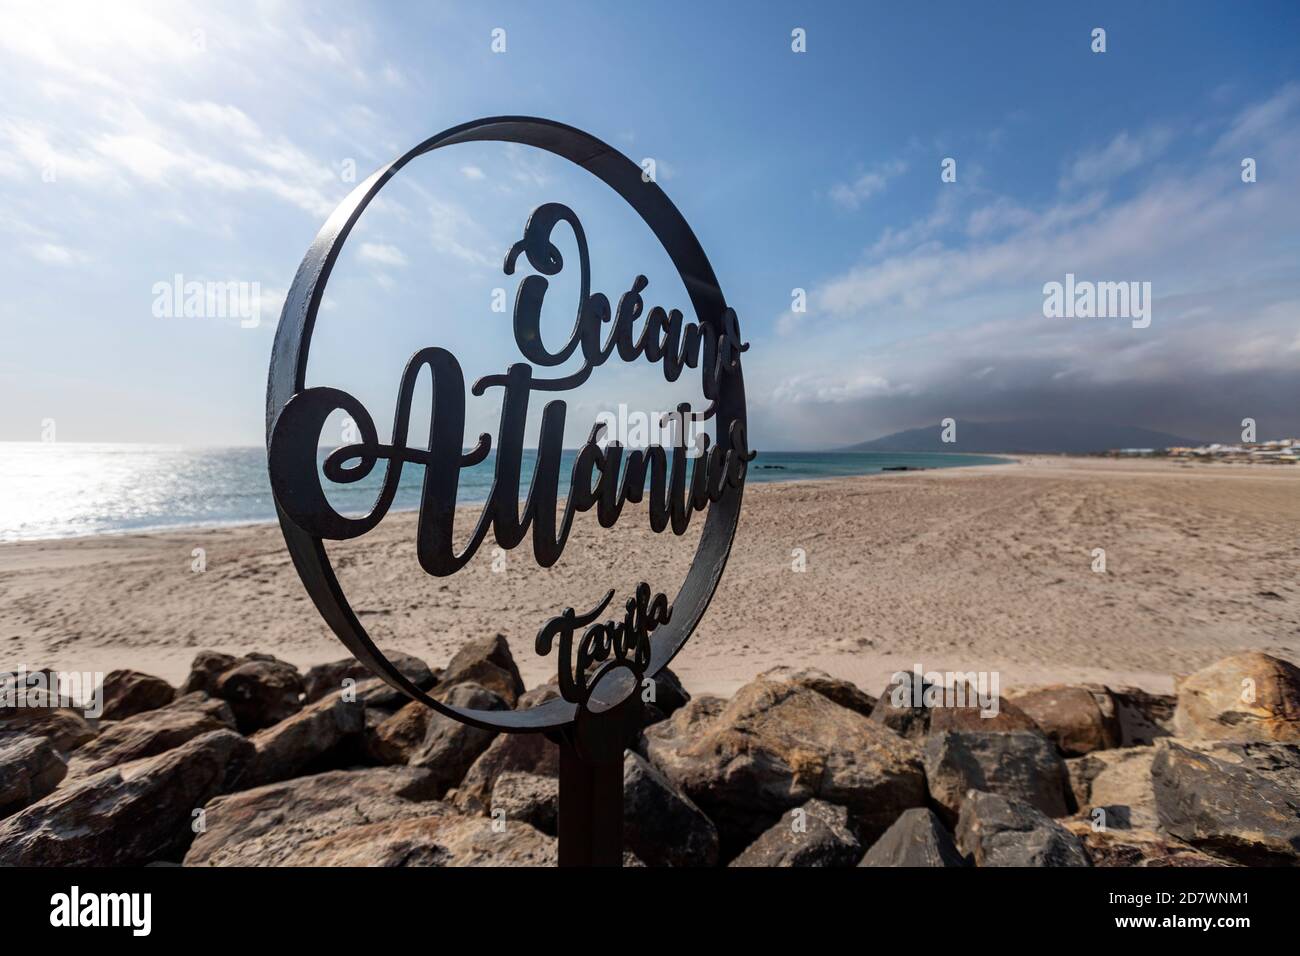 Oceano atlántico sign in Isla de las Palomas, Tarifa, province of Cádiz, Andalusia, Spain Stock Photo